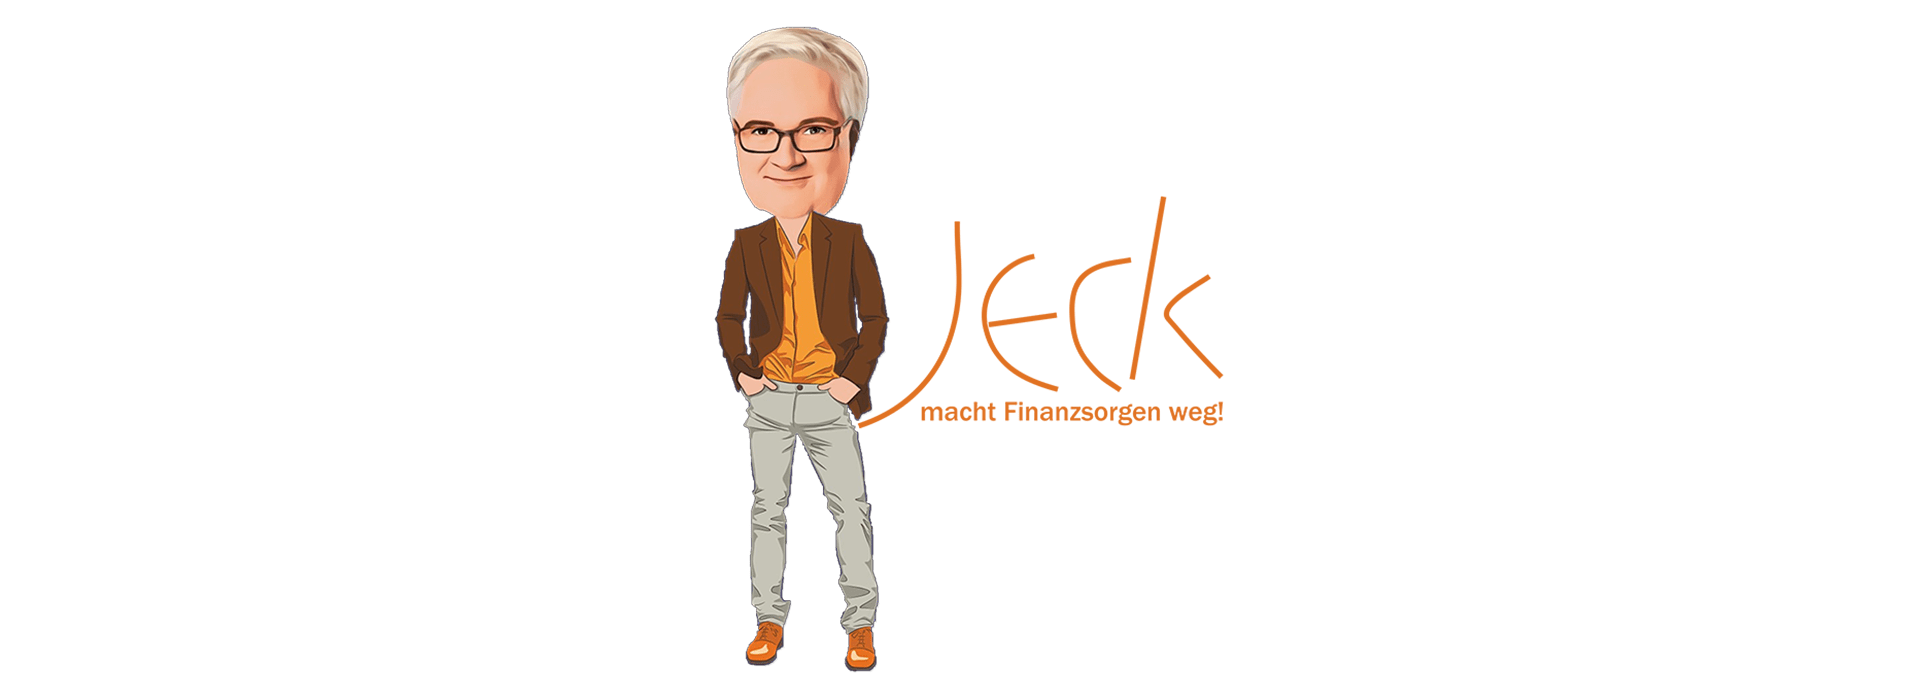 Jeck logo header